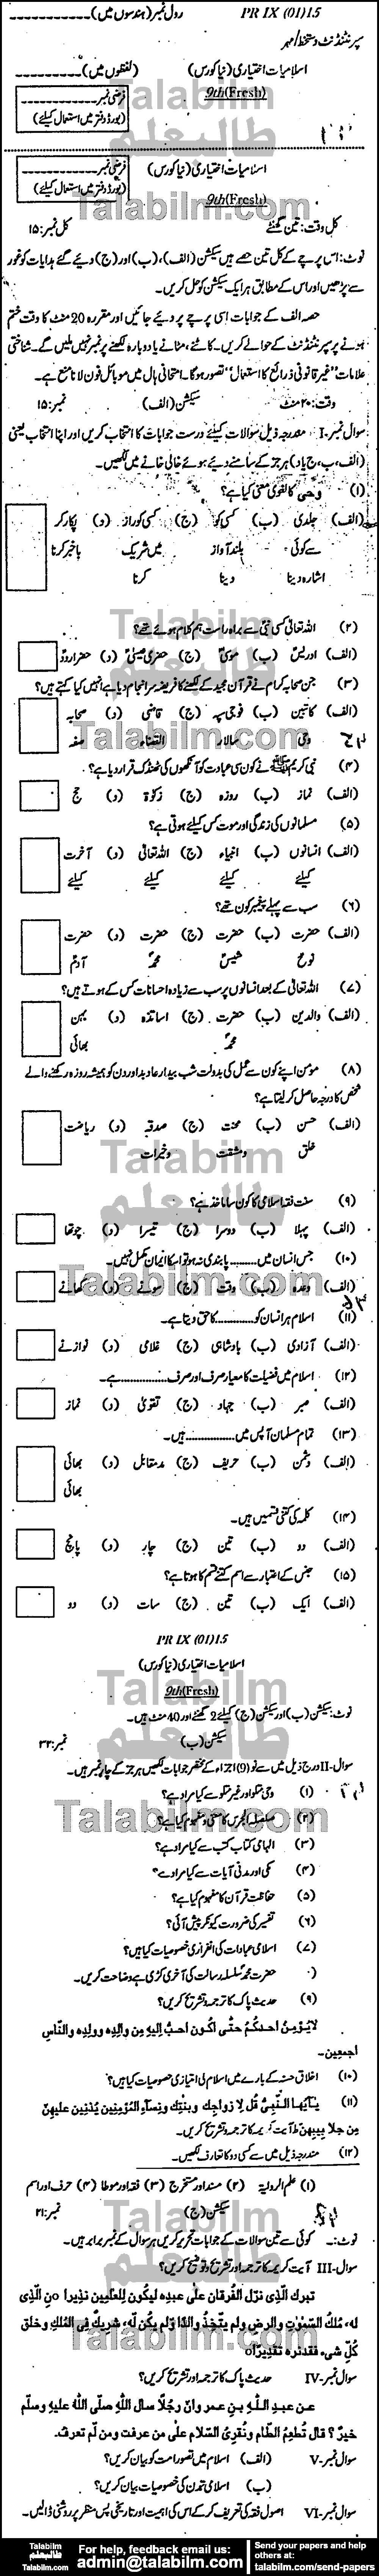 Islamiat Elective 0 past paper for Urdu Medium 2015 Group-I